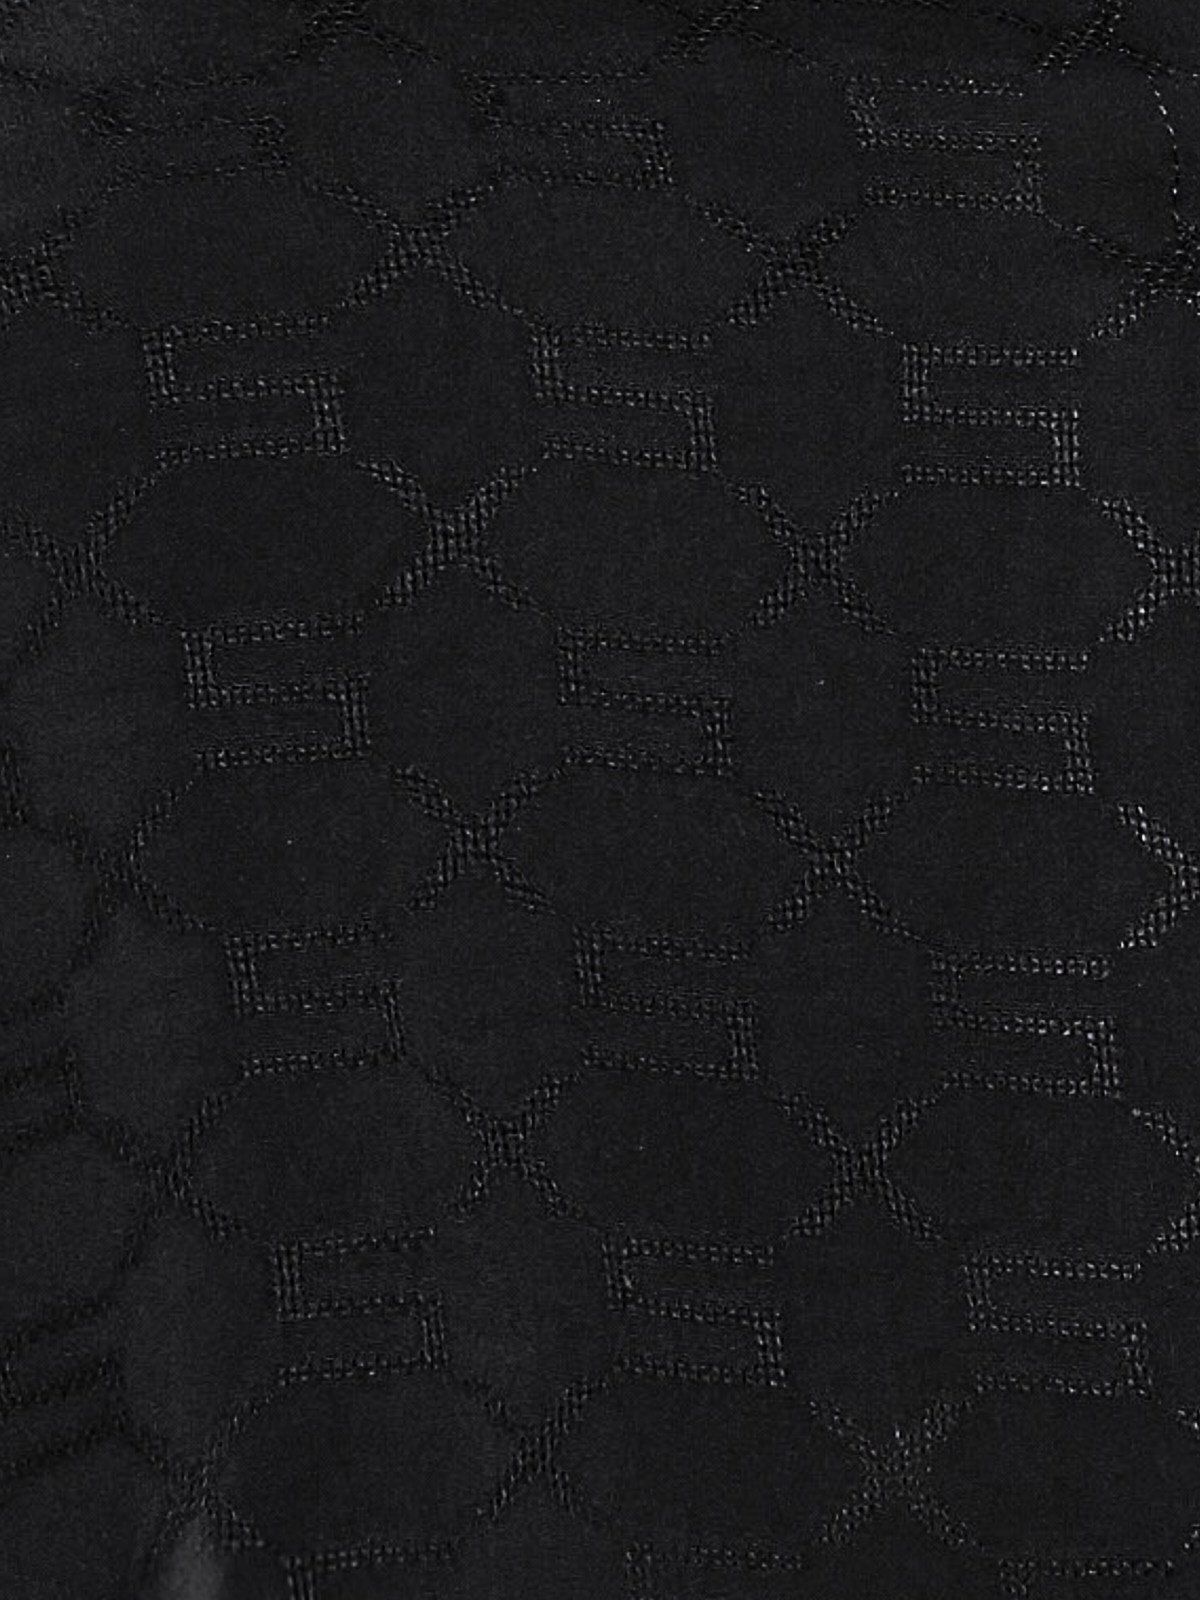 Woven Voile Monogram Sleep Crop Shirt with Drawstring in Black